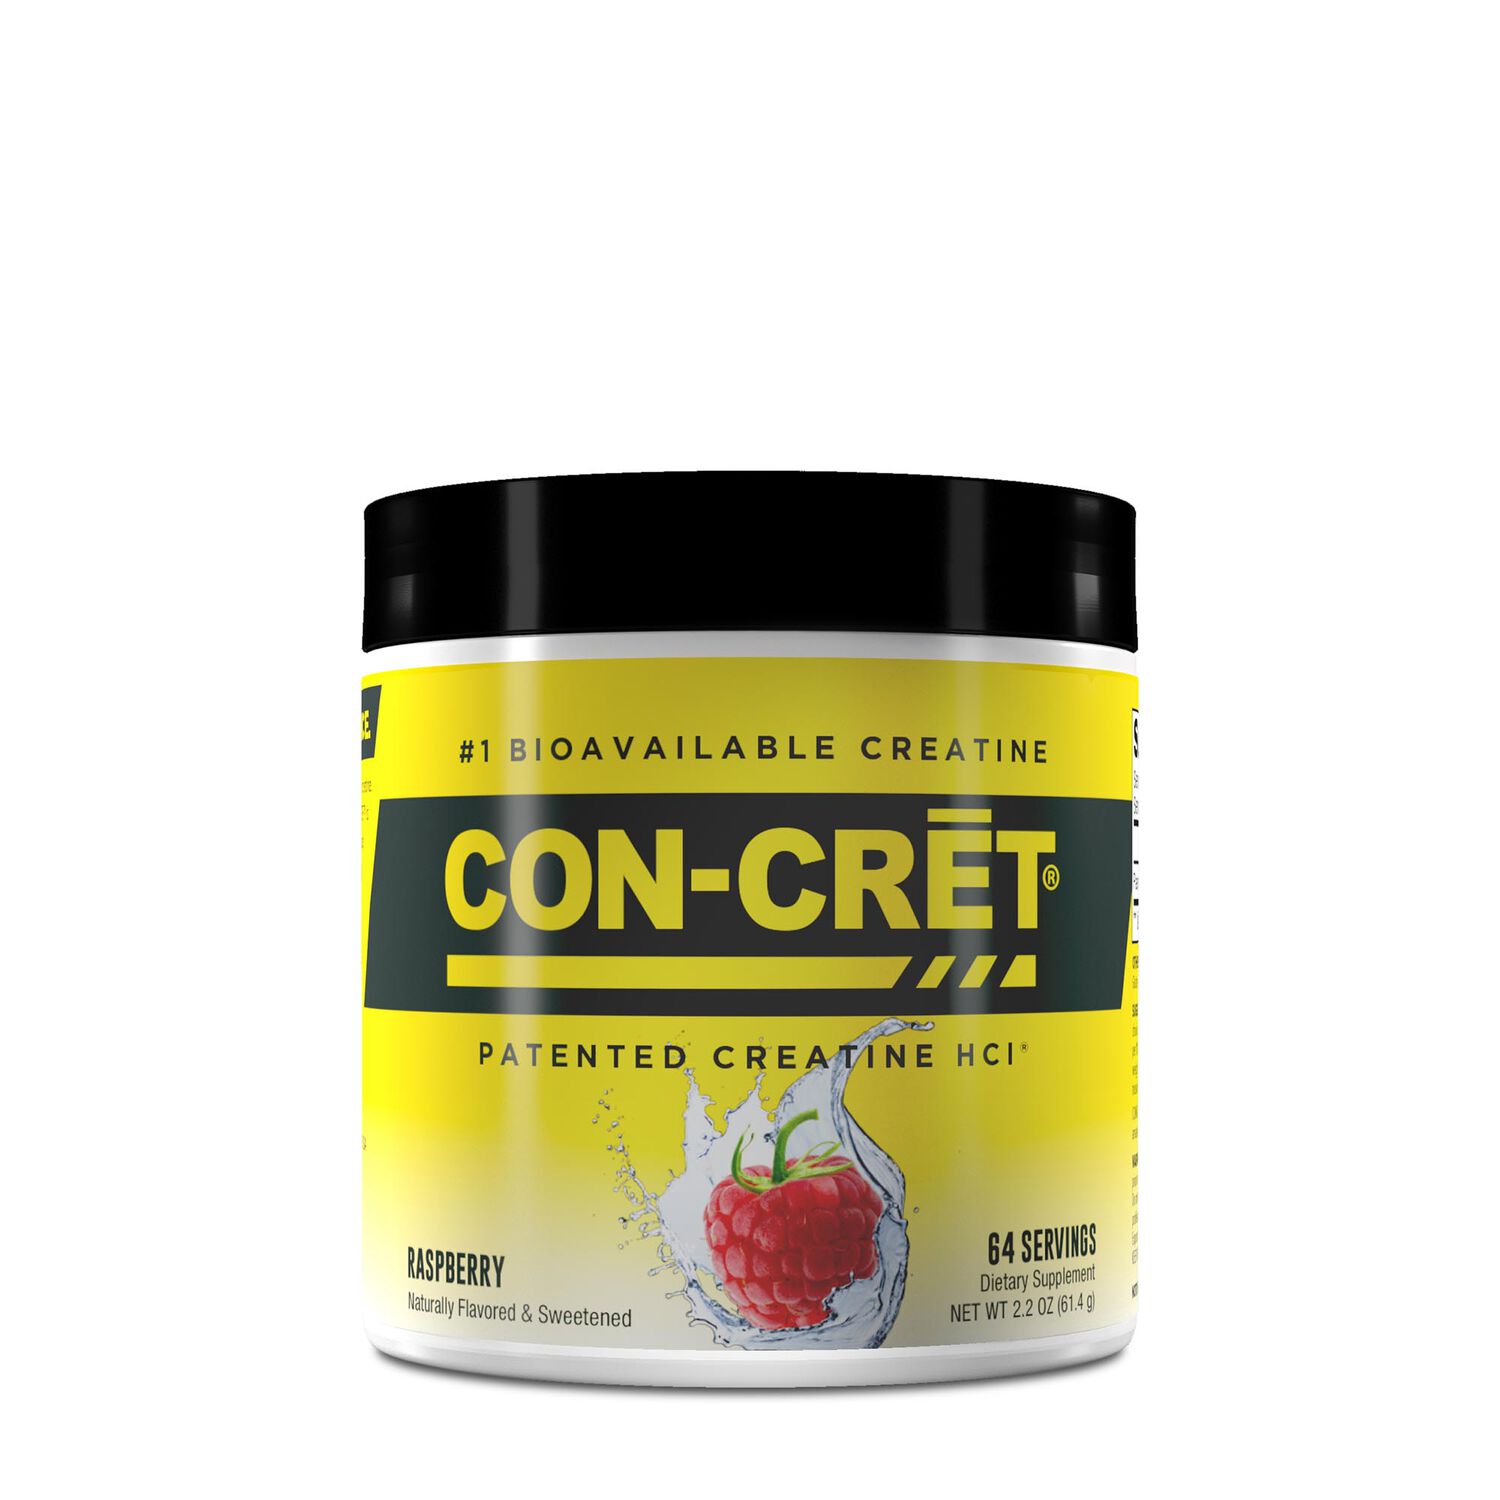 CON-CRET Patented Creatine Hcl Powder